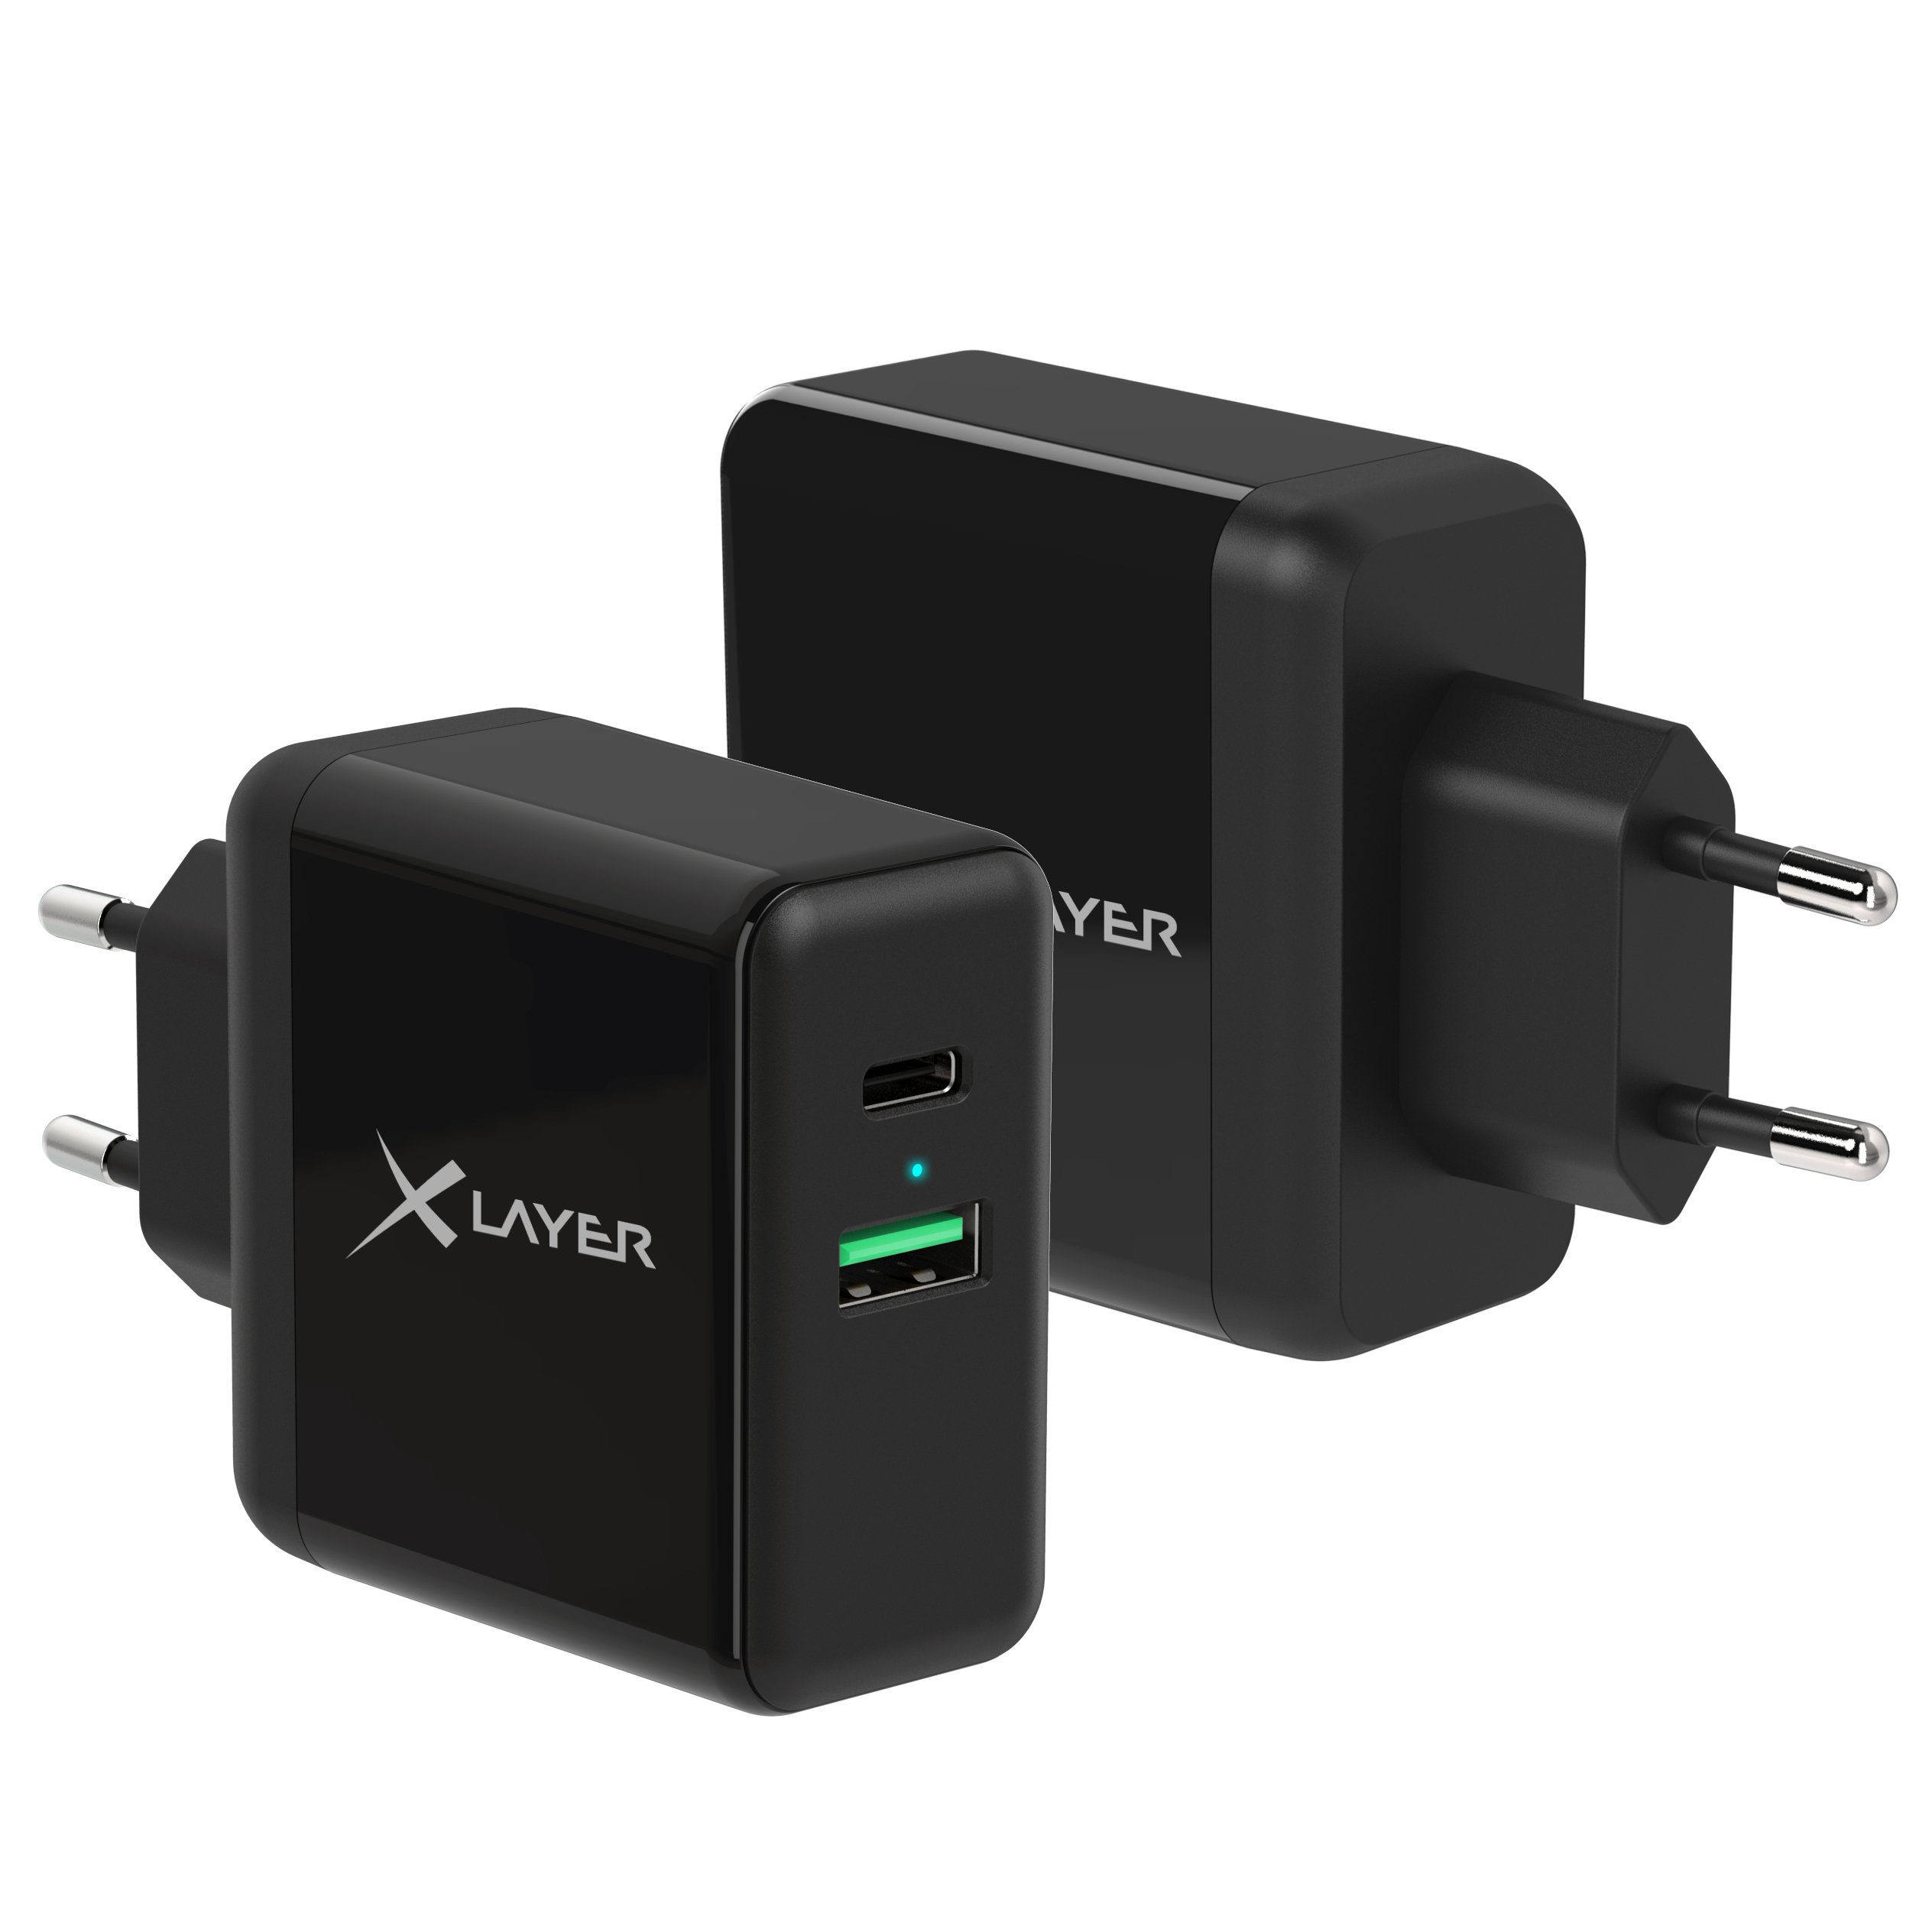 XLAYER Ladegerät XLayer USB QC3.0 + 5V/2.4A Netzteil Smartphone-Ladegerät